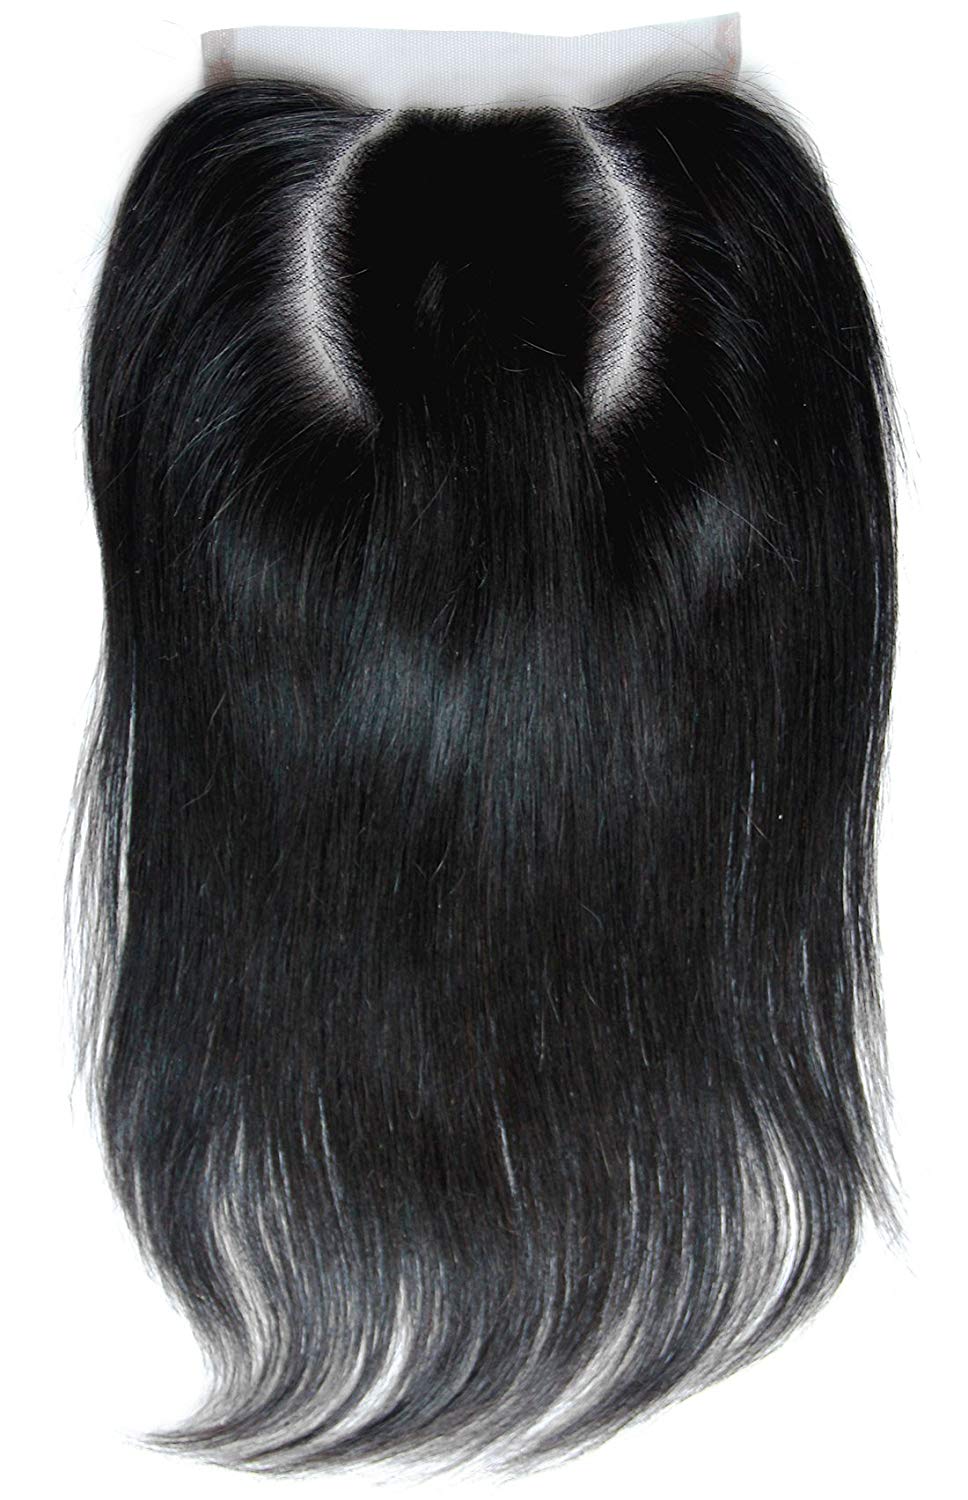 Ms Fenda Hair Raw Remy Virgin Peruvian Human Hair Lace Closure, Straight style,O-Part 5x5 Lace Closure